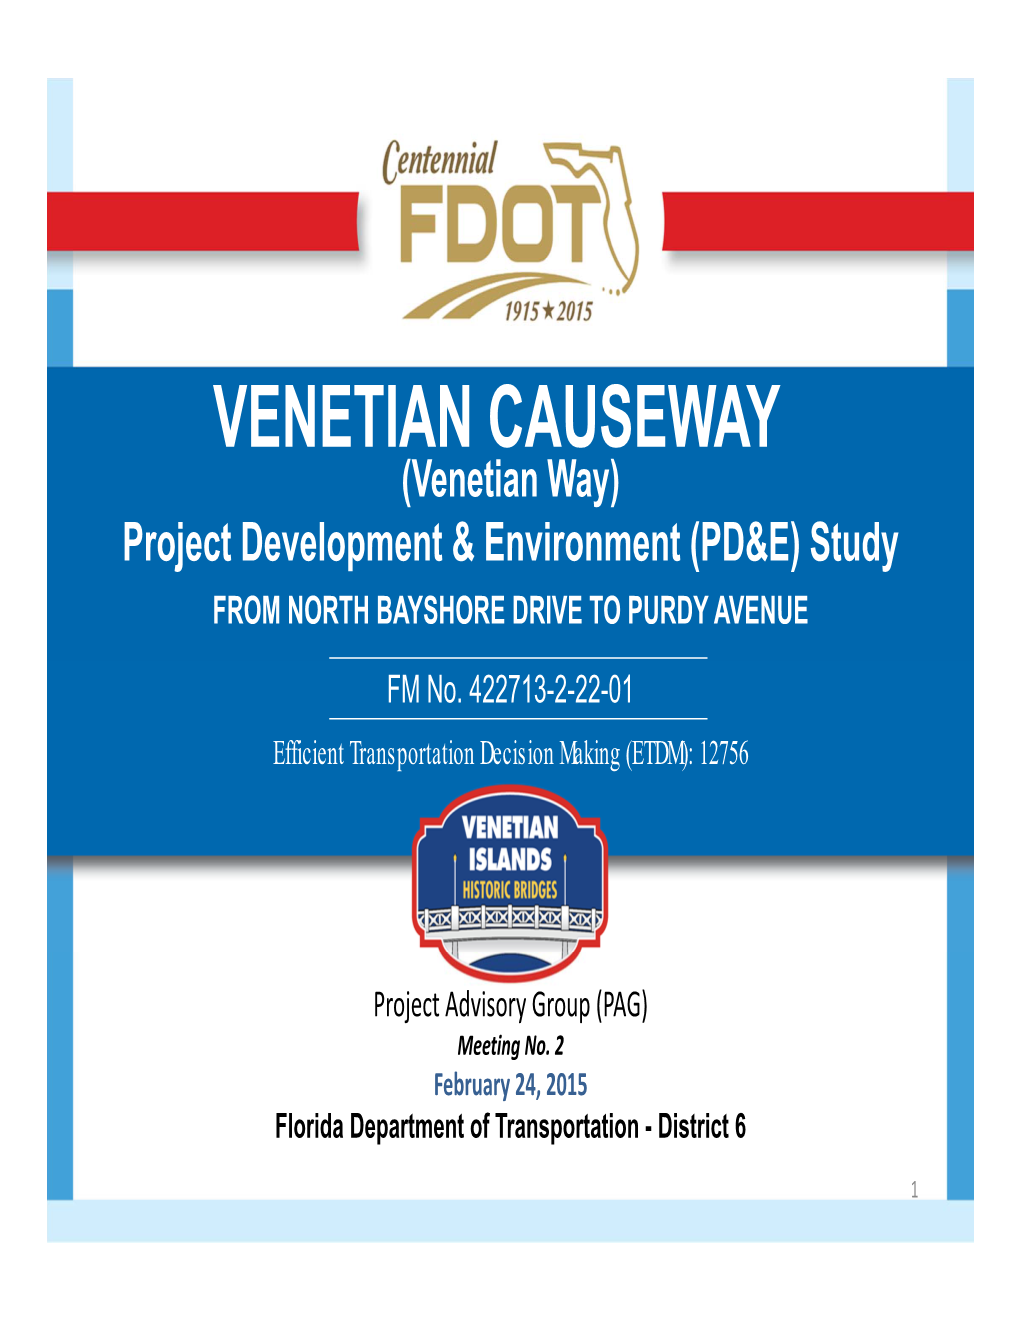 VENETIAN CAUSEWAY (Venetian Way) Project Development & Environment (PD&E) Study from NORTH BAYSHORE DRIVE to PURDY AVENUE